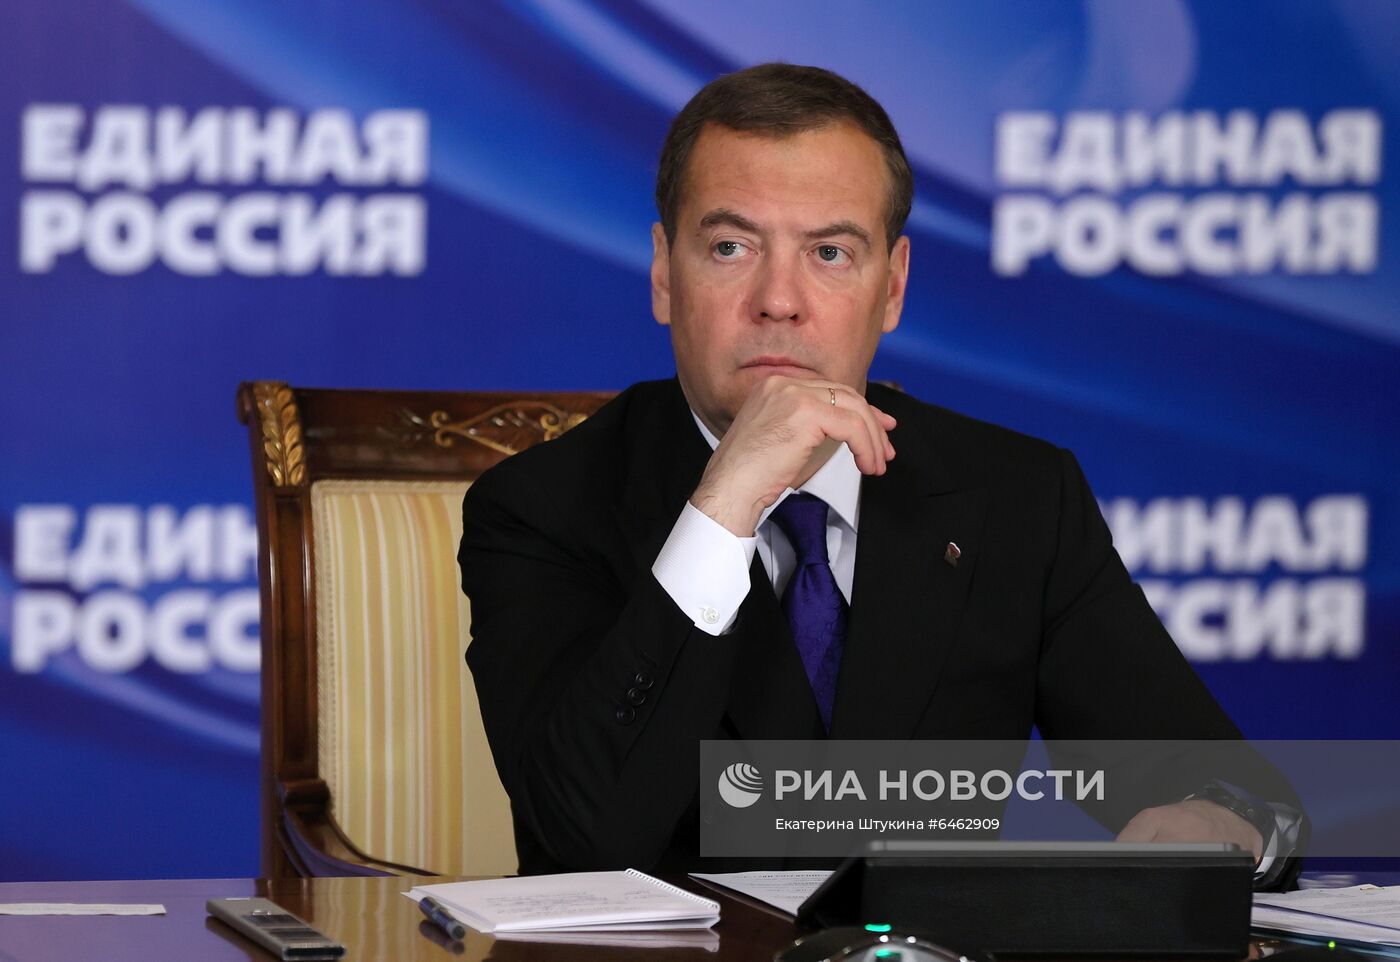 Зампред Совбеза РФ Д. Медведев провел онлайн-совещание о газификации регионов